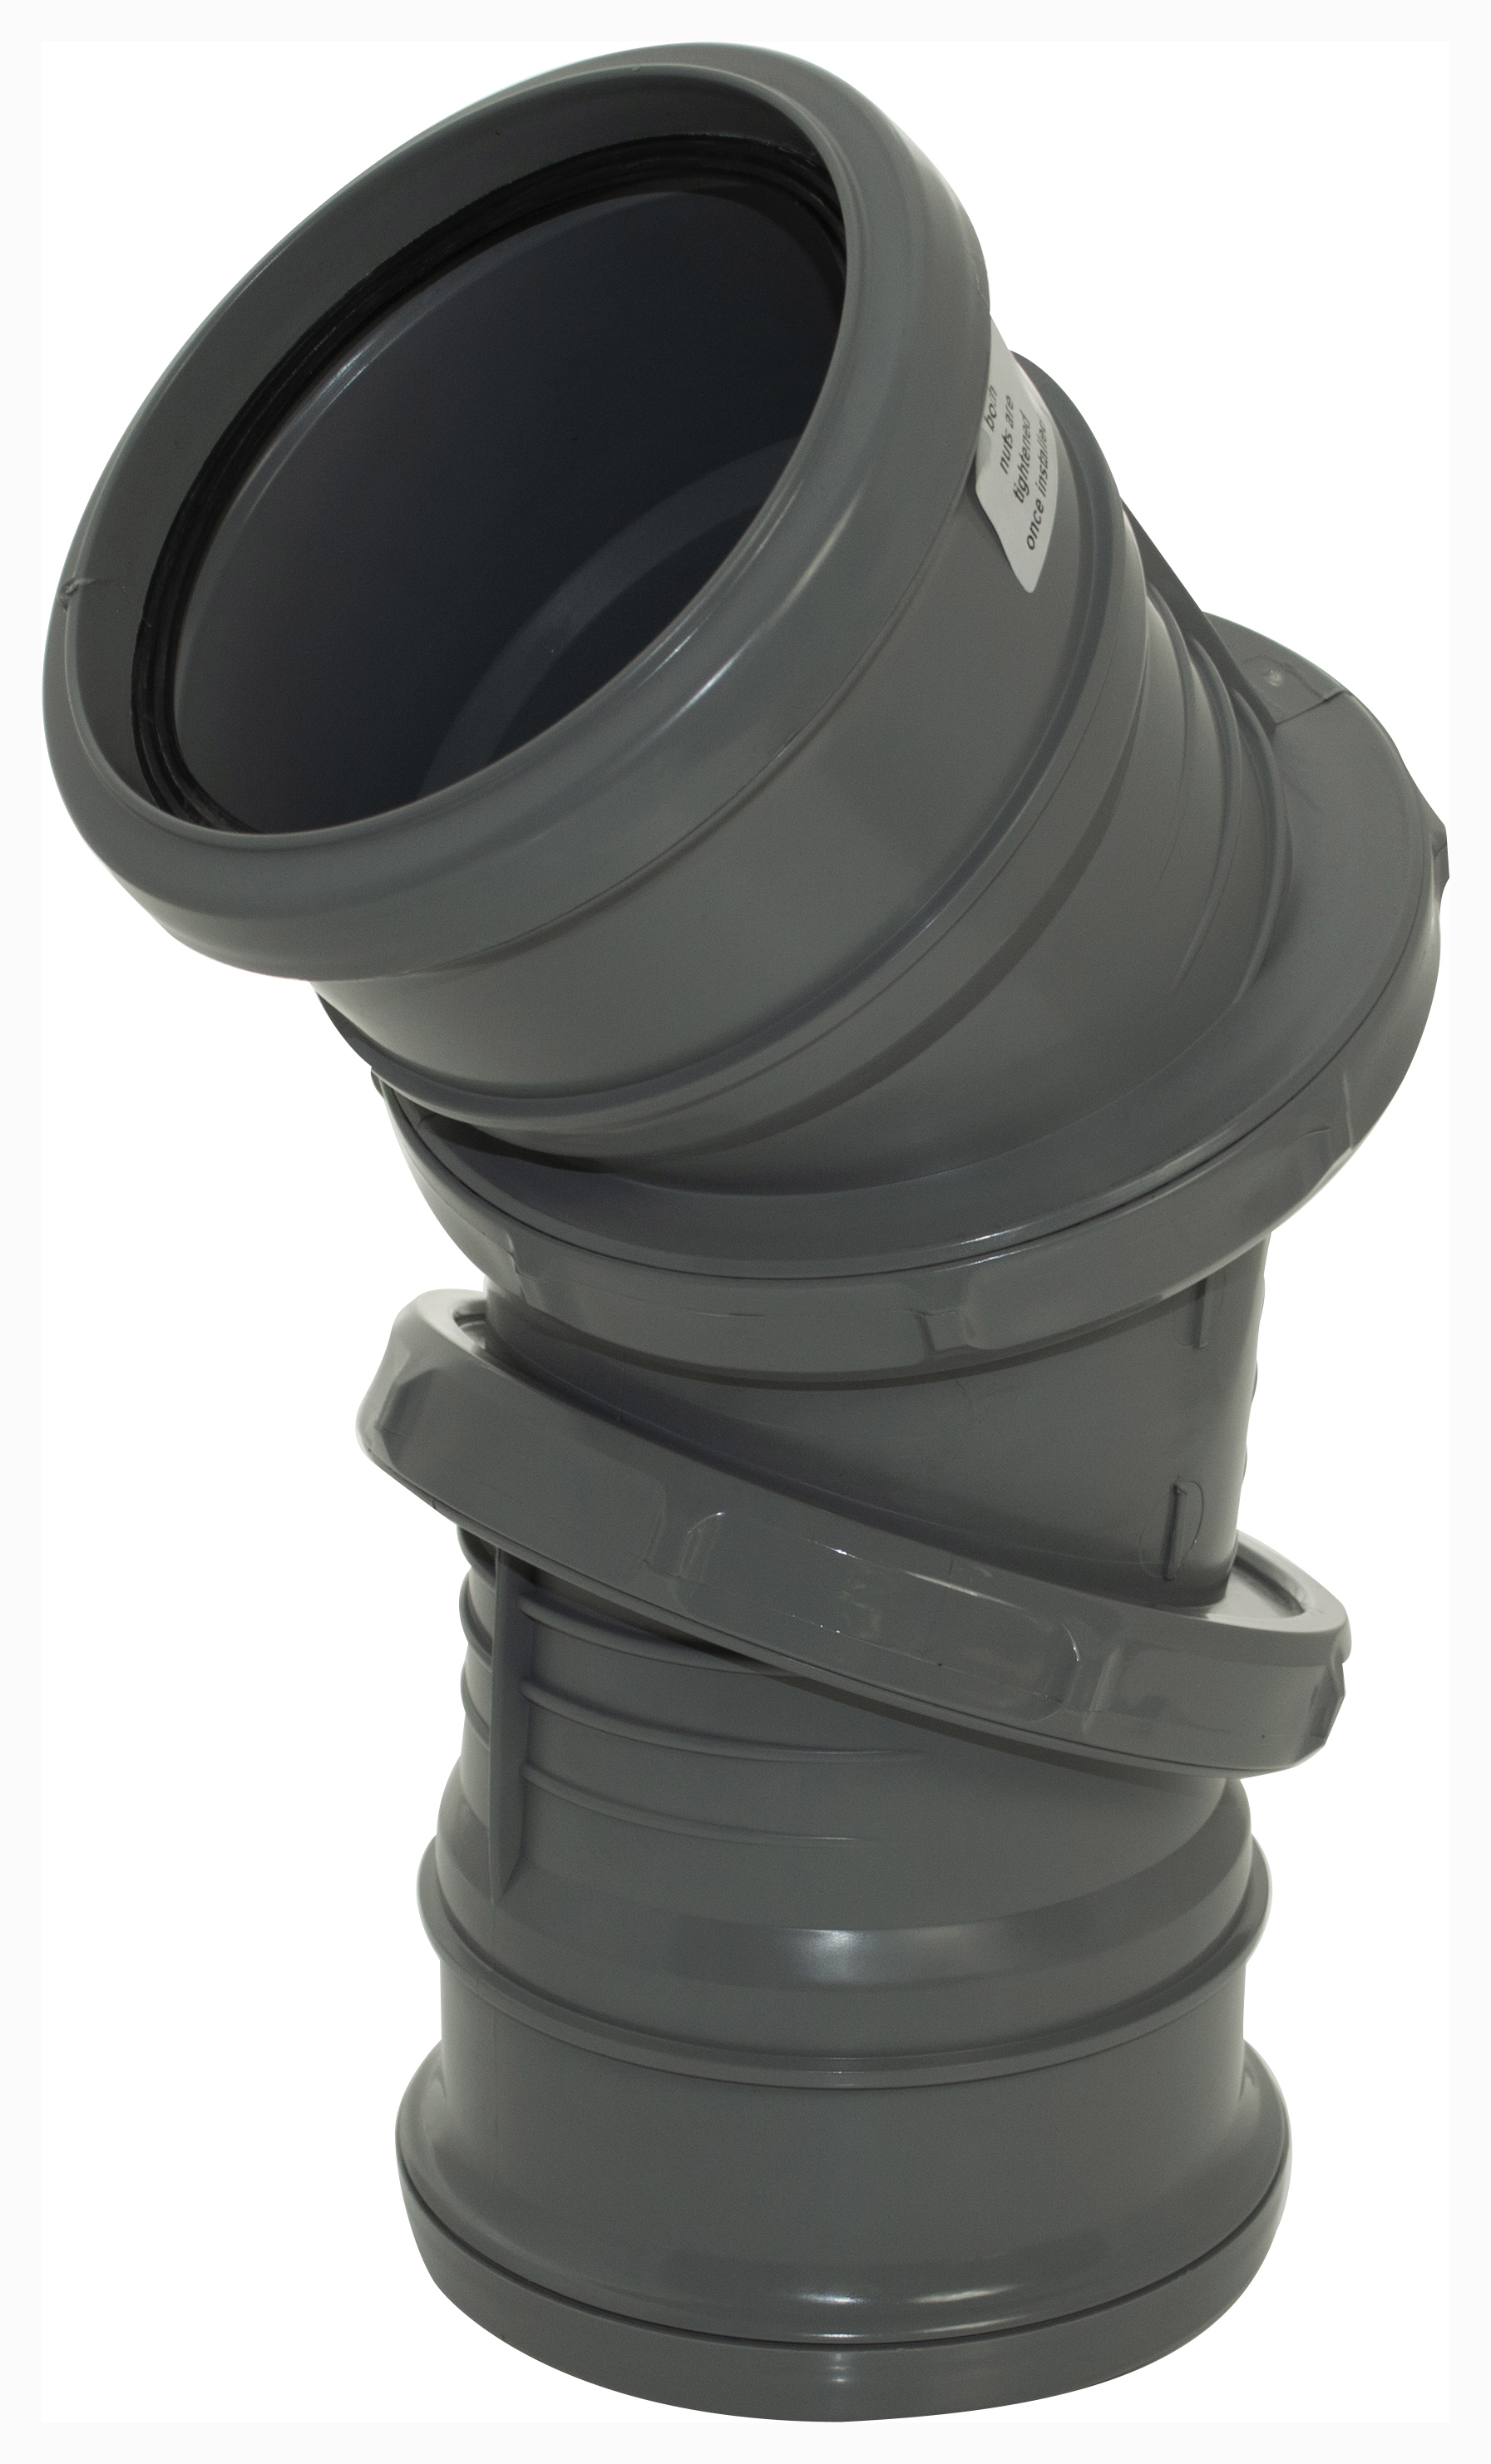 Image of Floplast 110mm Soil Pipe Adjustable Bend Double Socket 0° to 90° - Anthracite Grey SP560AG